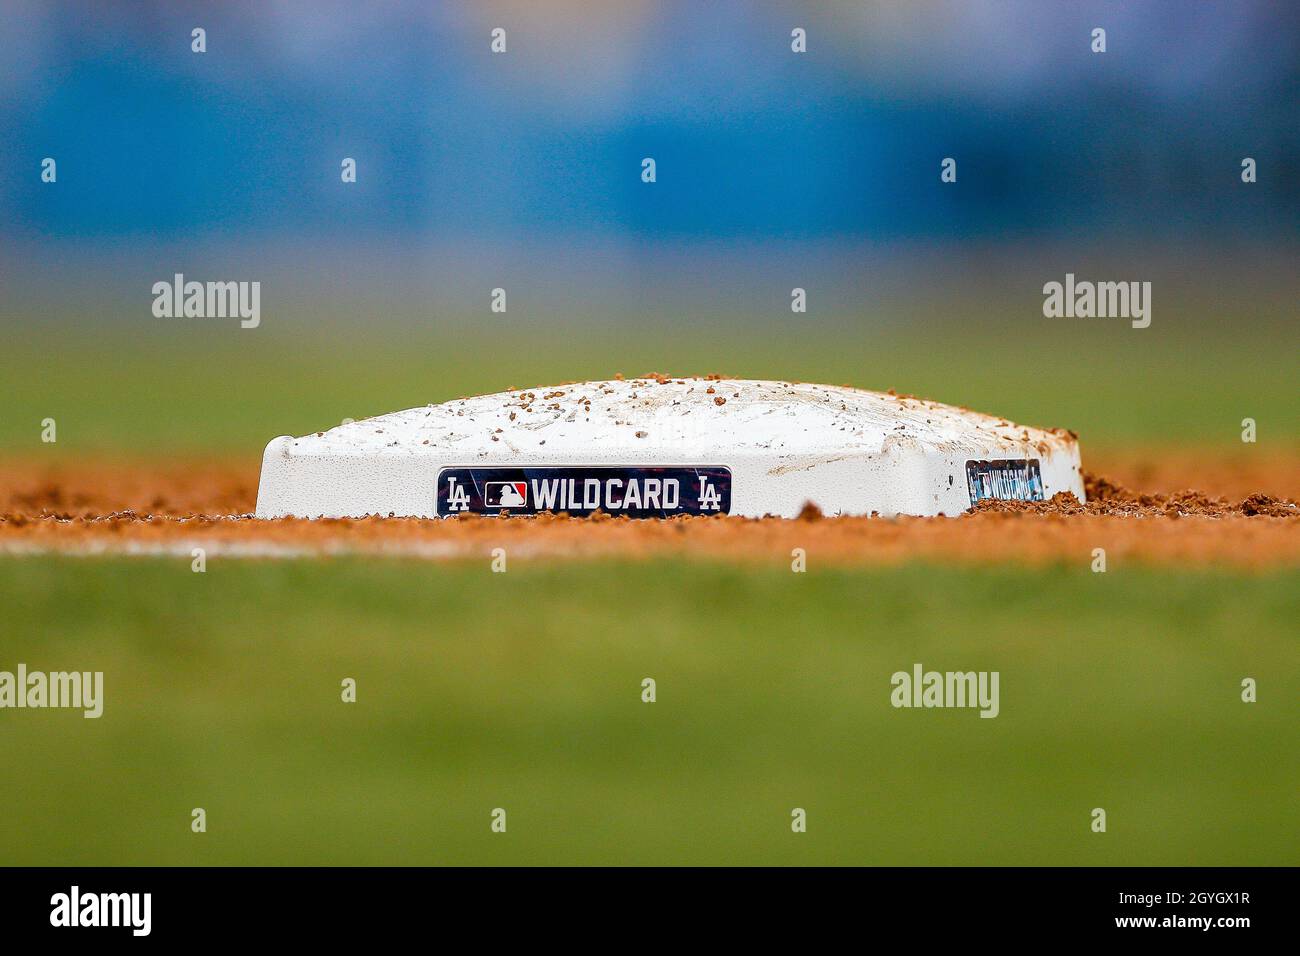 Vista dettagliata della prima base durante una partita della MLB National League Wild Card tra i St. Louis Cardinals e i Los Angeles Dodgers, mercoledì, ottobre Foto Stock